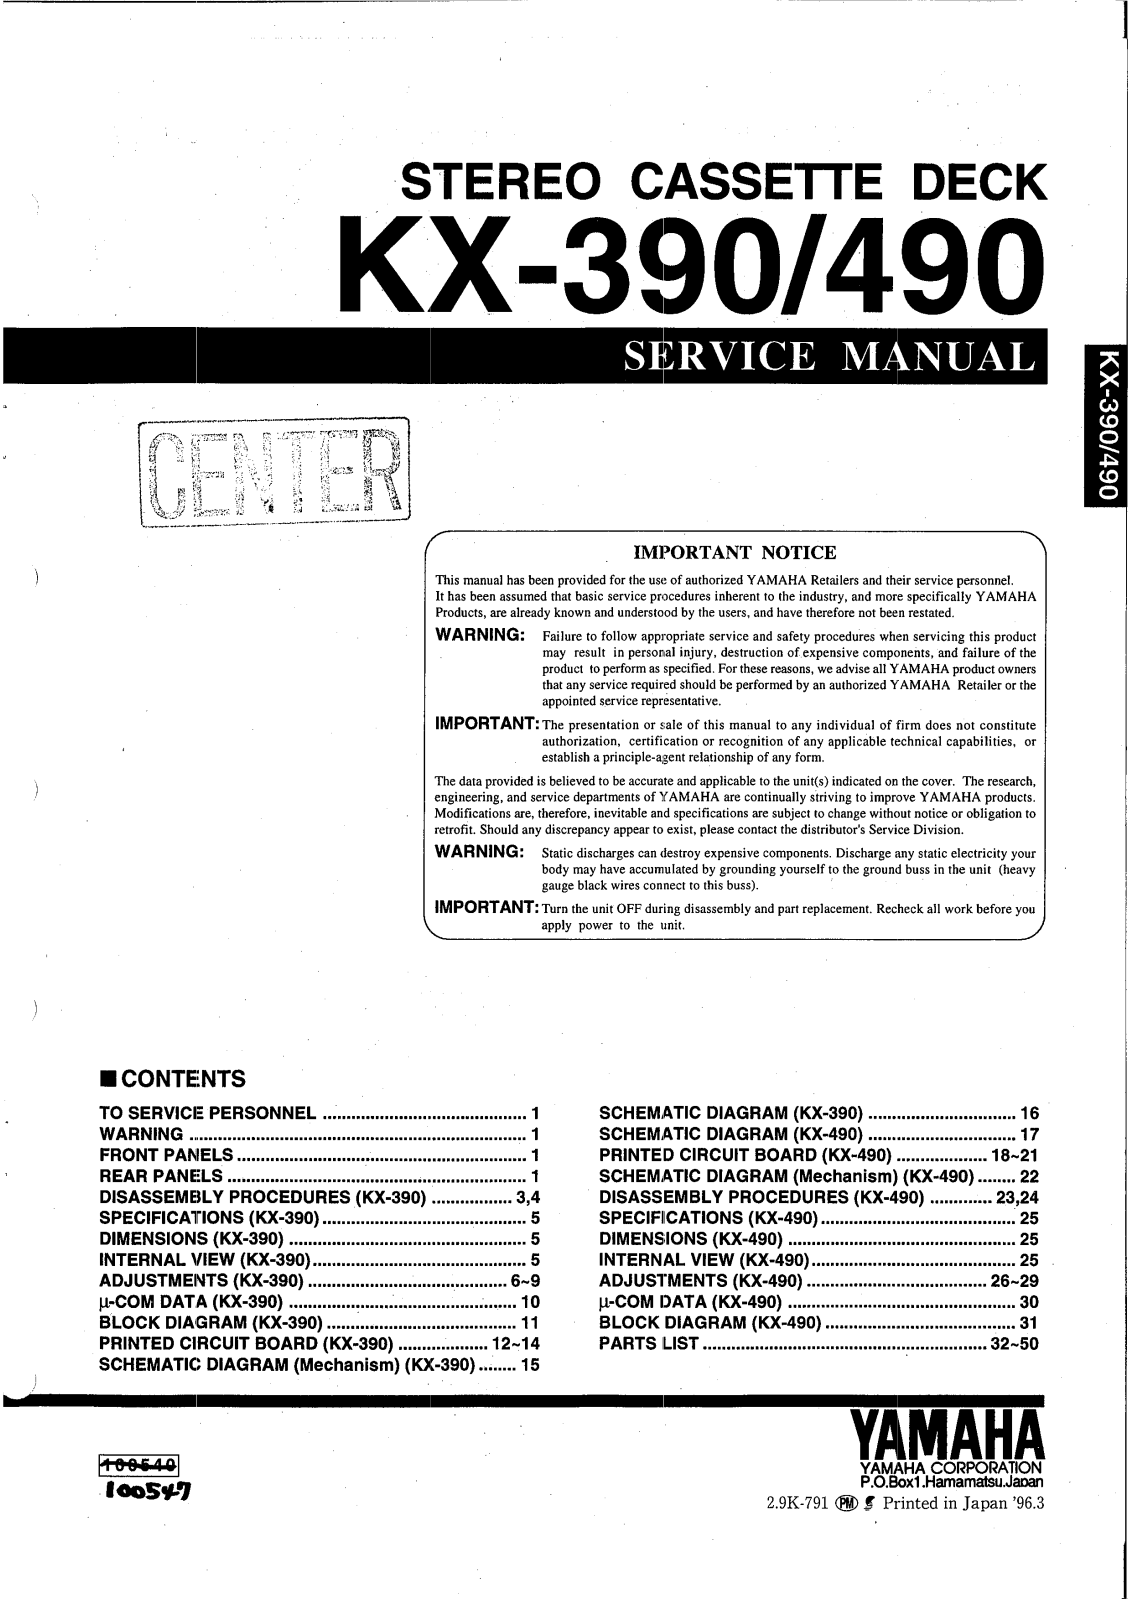 Yamaha KX-490 Service manual